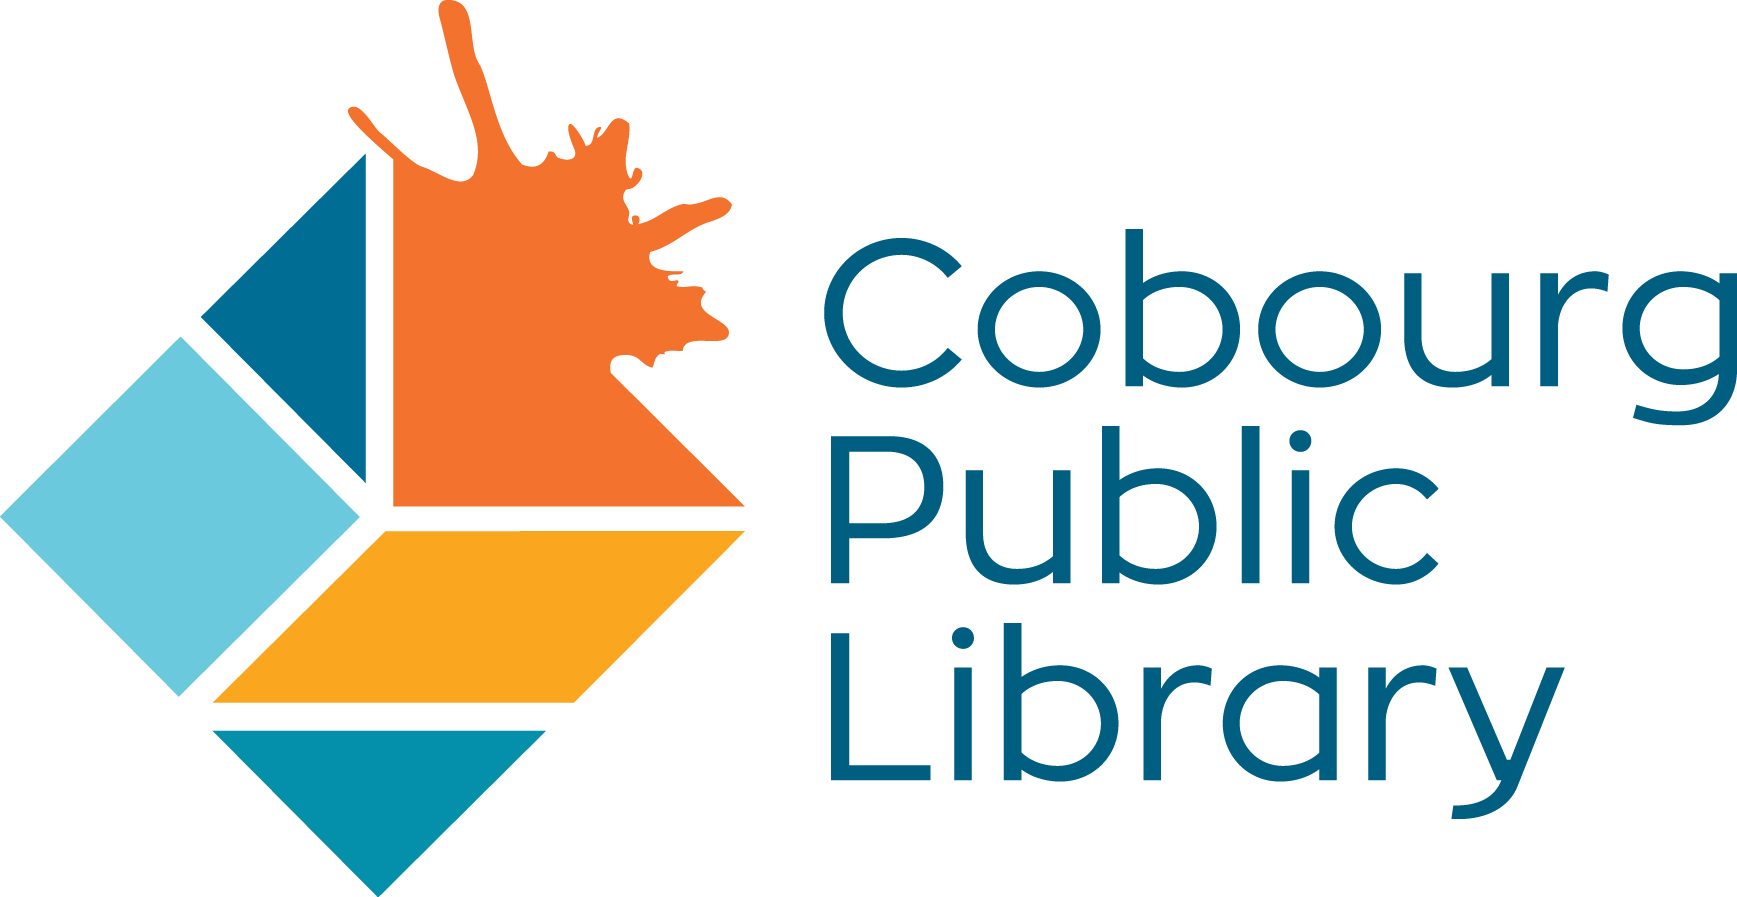 The Cobourg Public Library Board logo